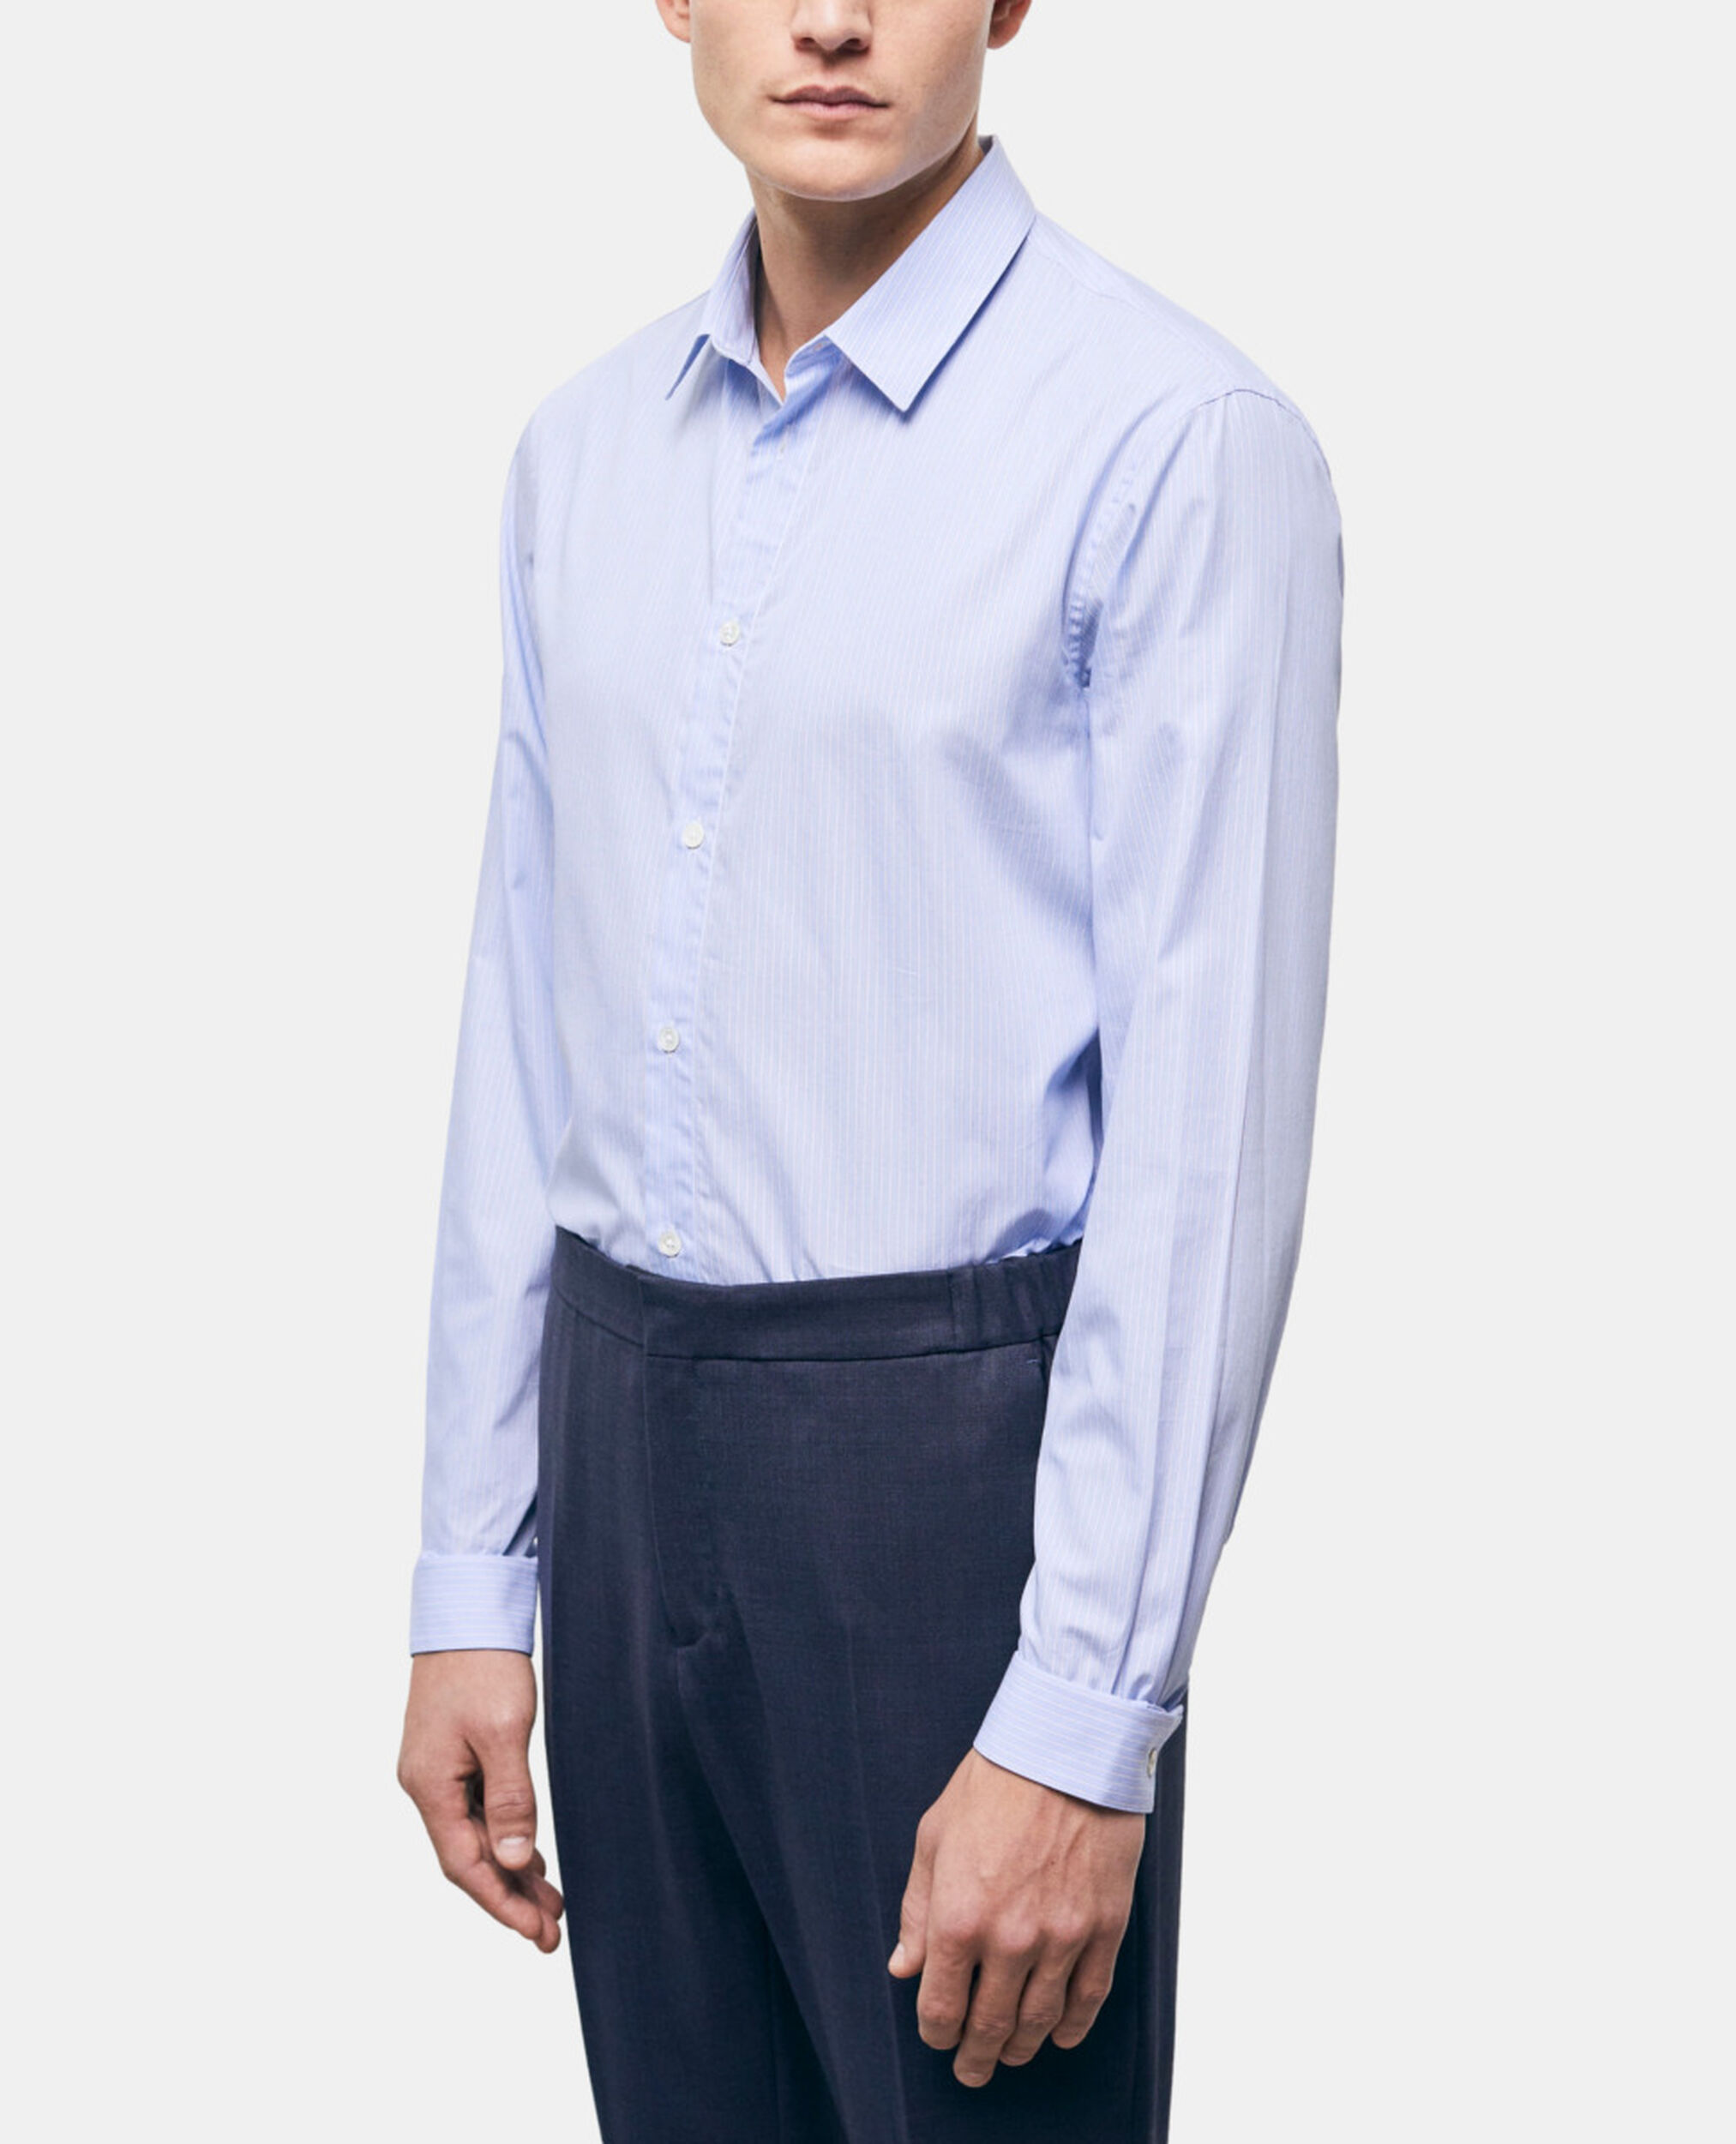 Gestreiftes Hemd mit Klassischer Kragen, WHITE / SKY BLUE, hi-res image number null